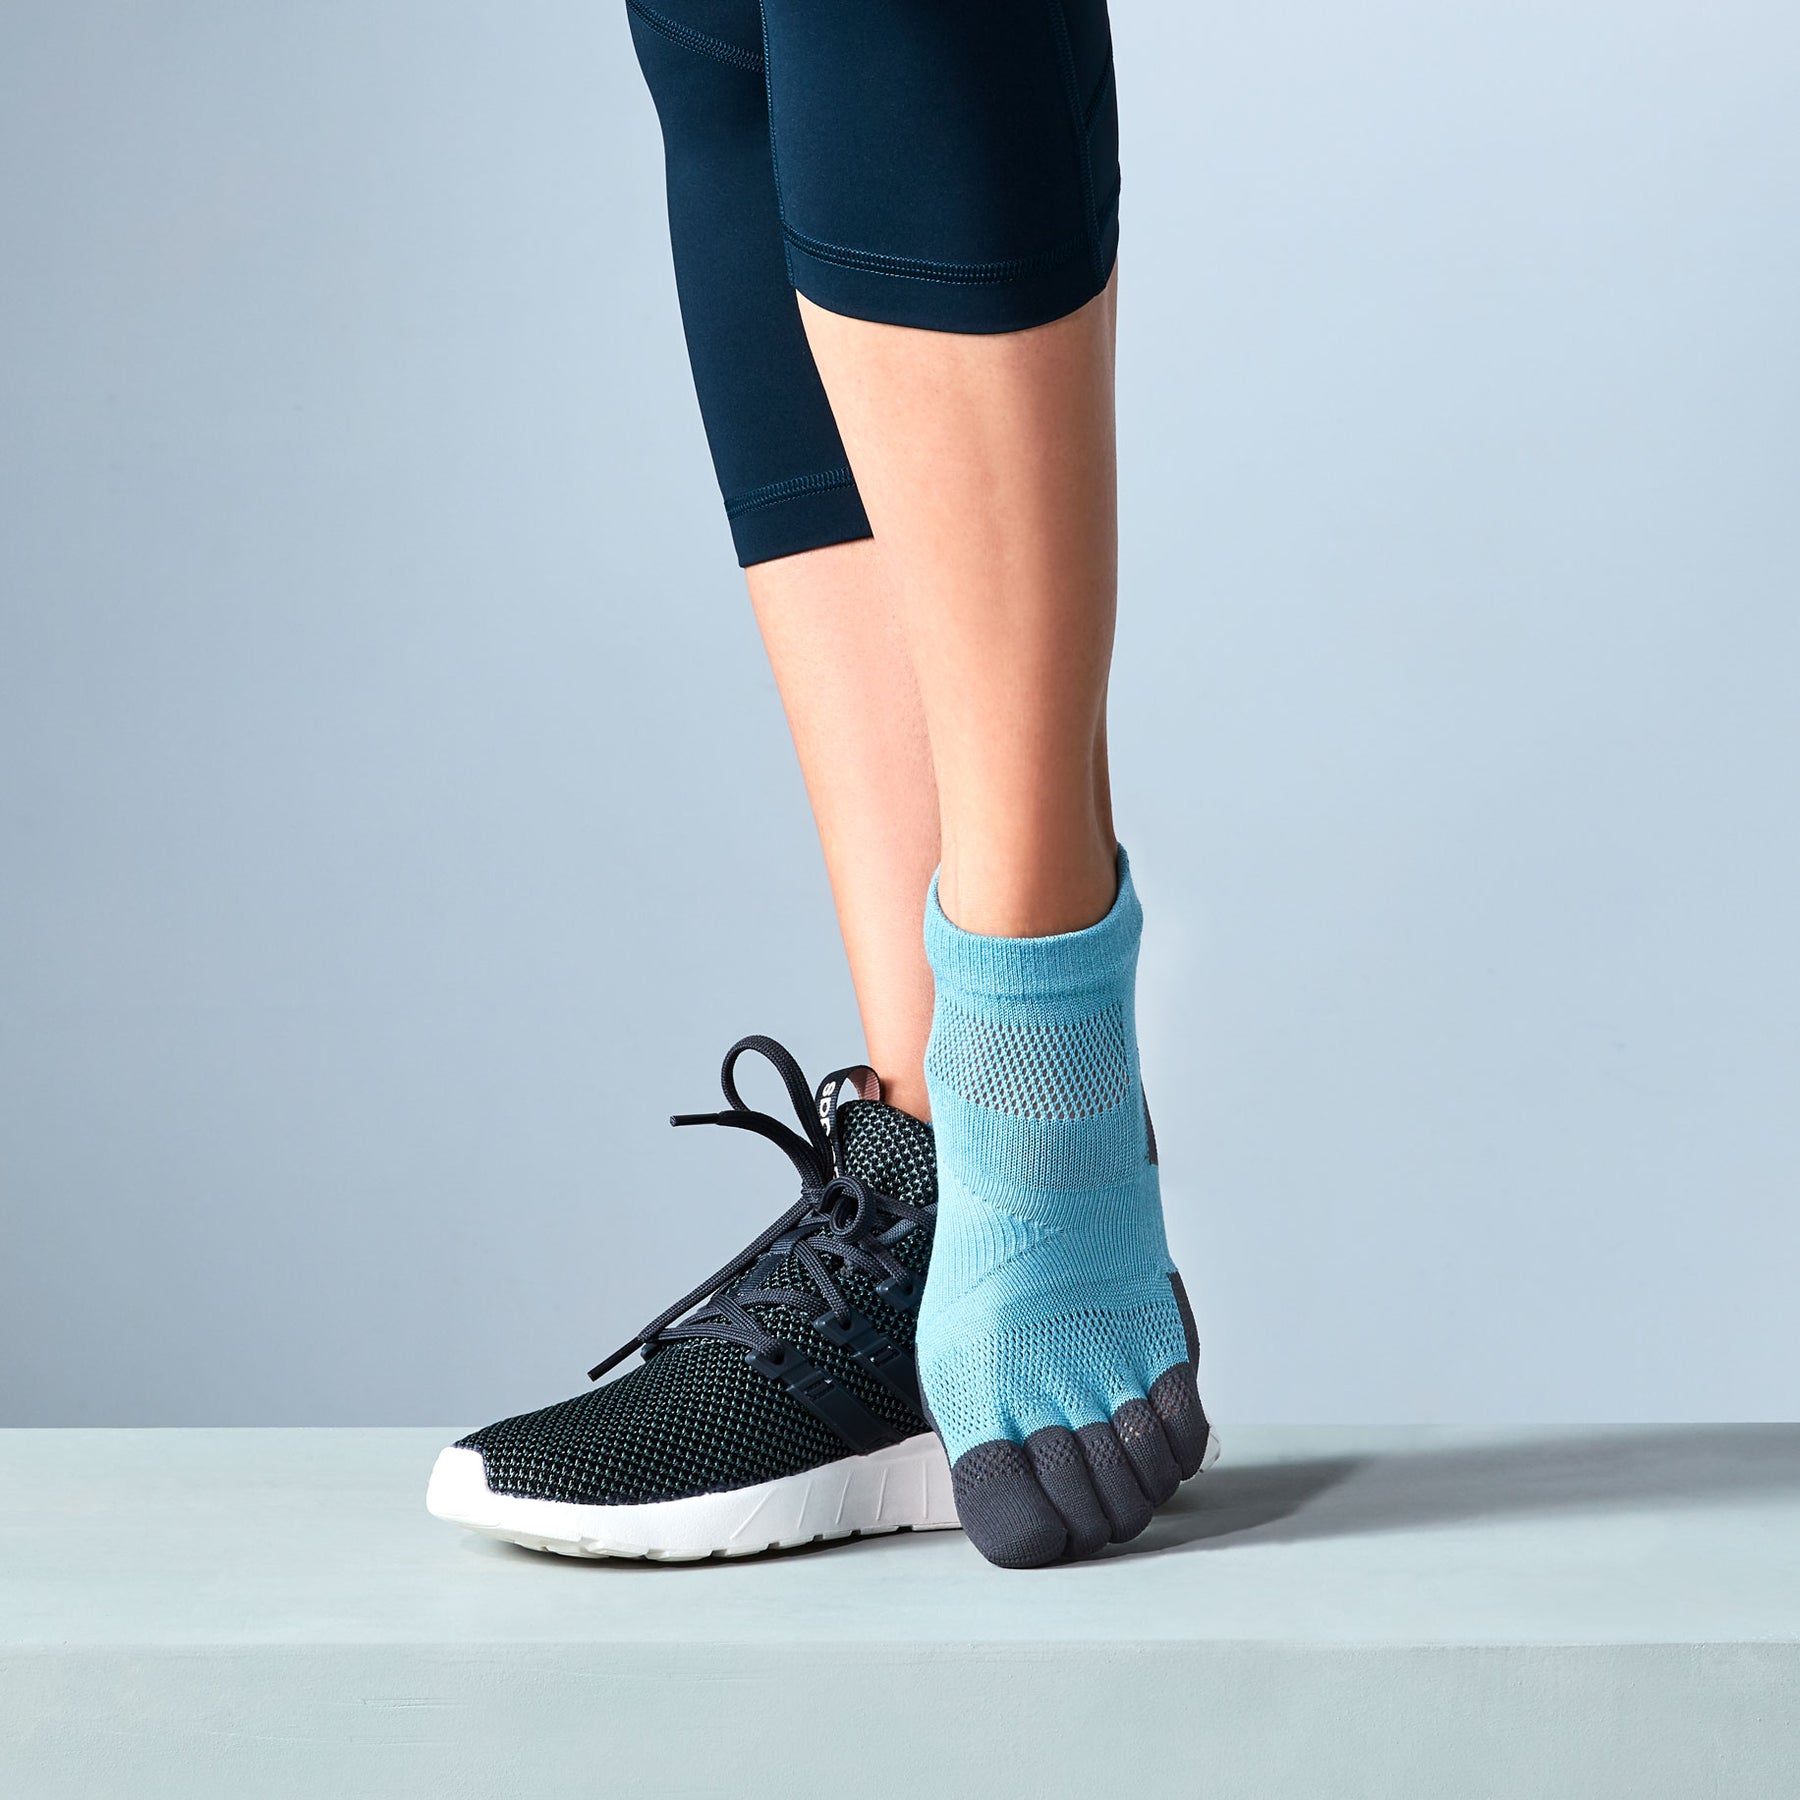 Women's Knee Socks: 33 Items up to −44%